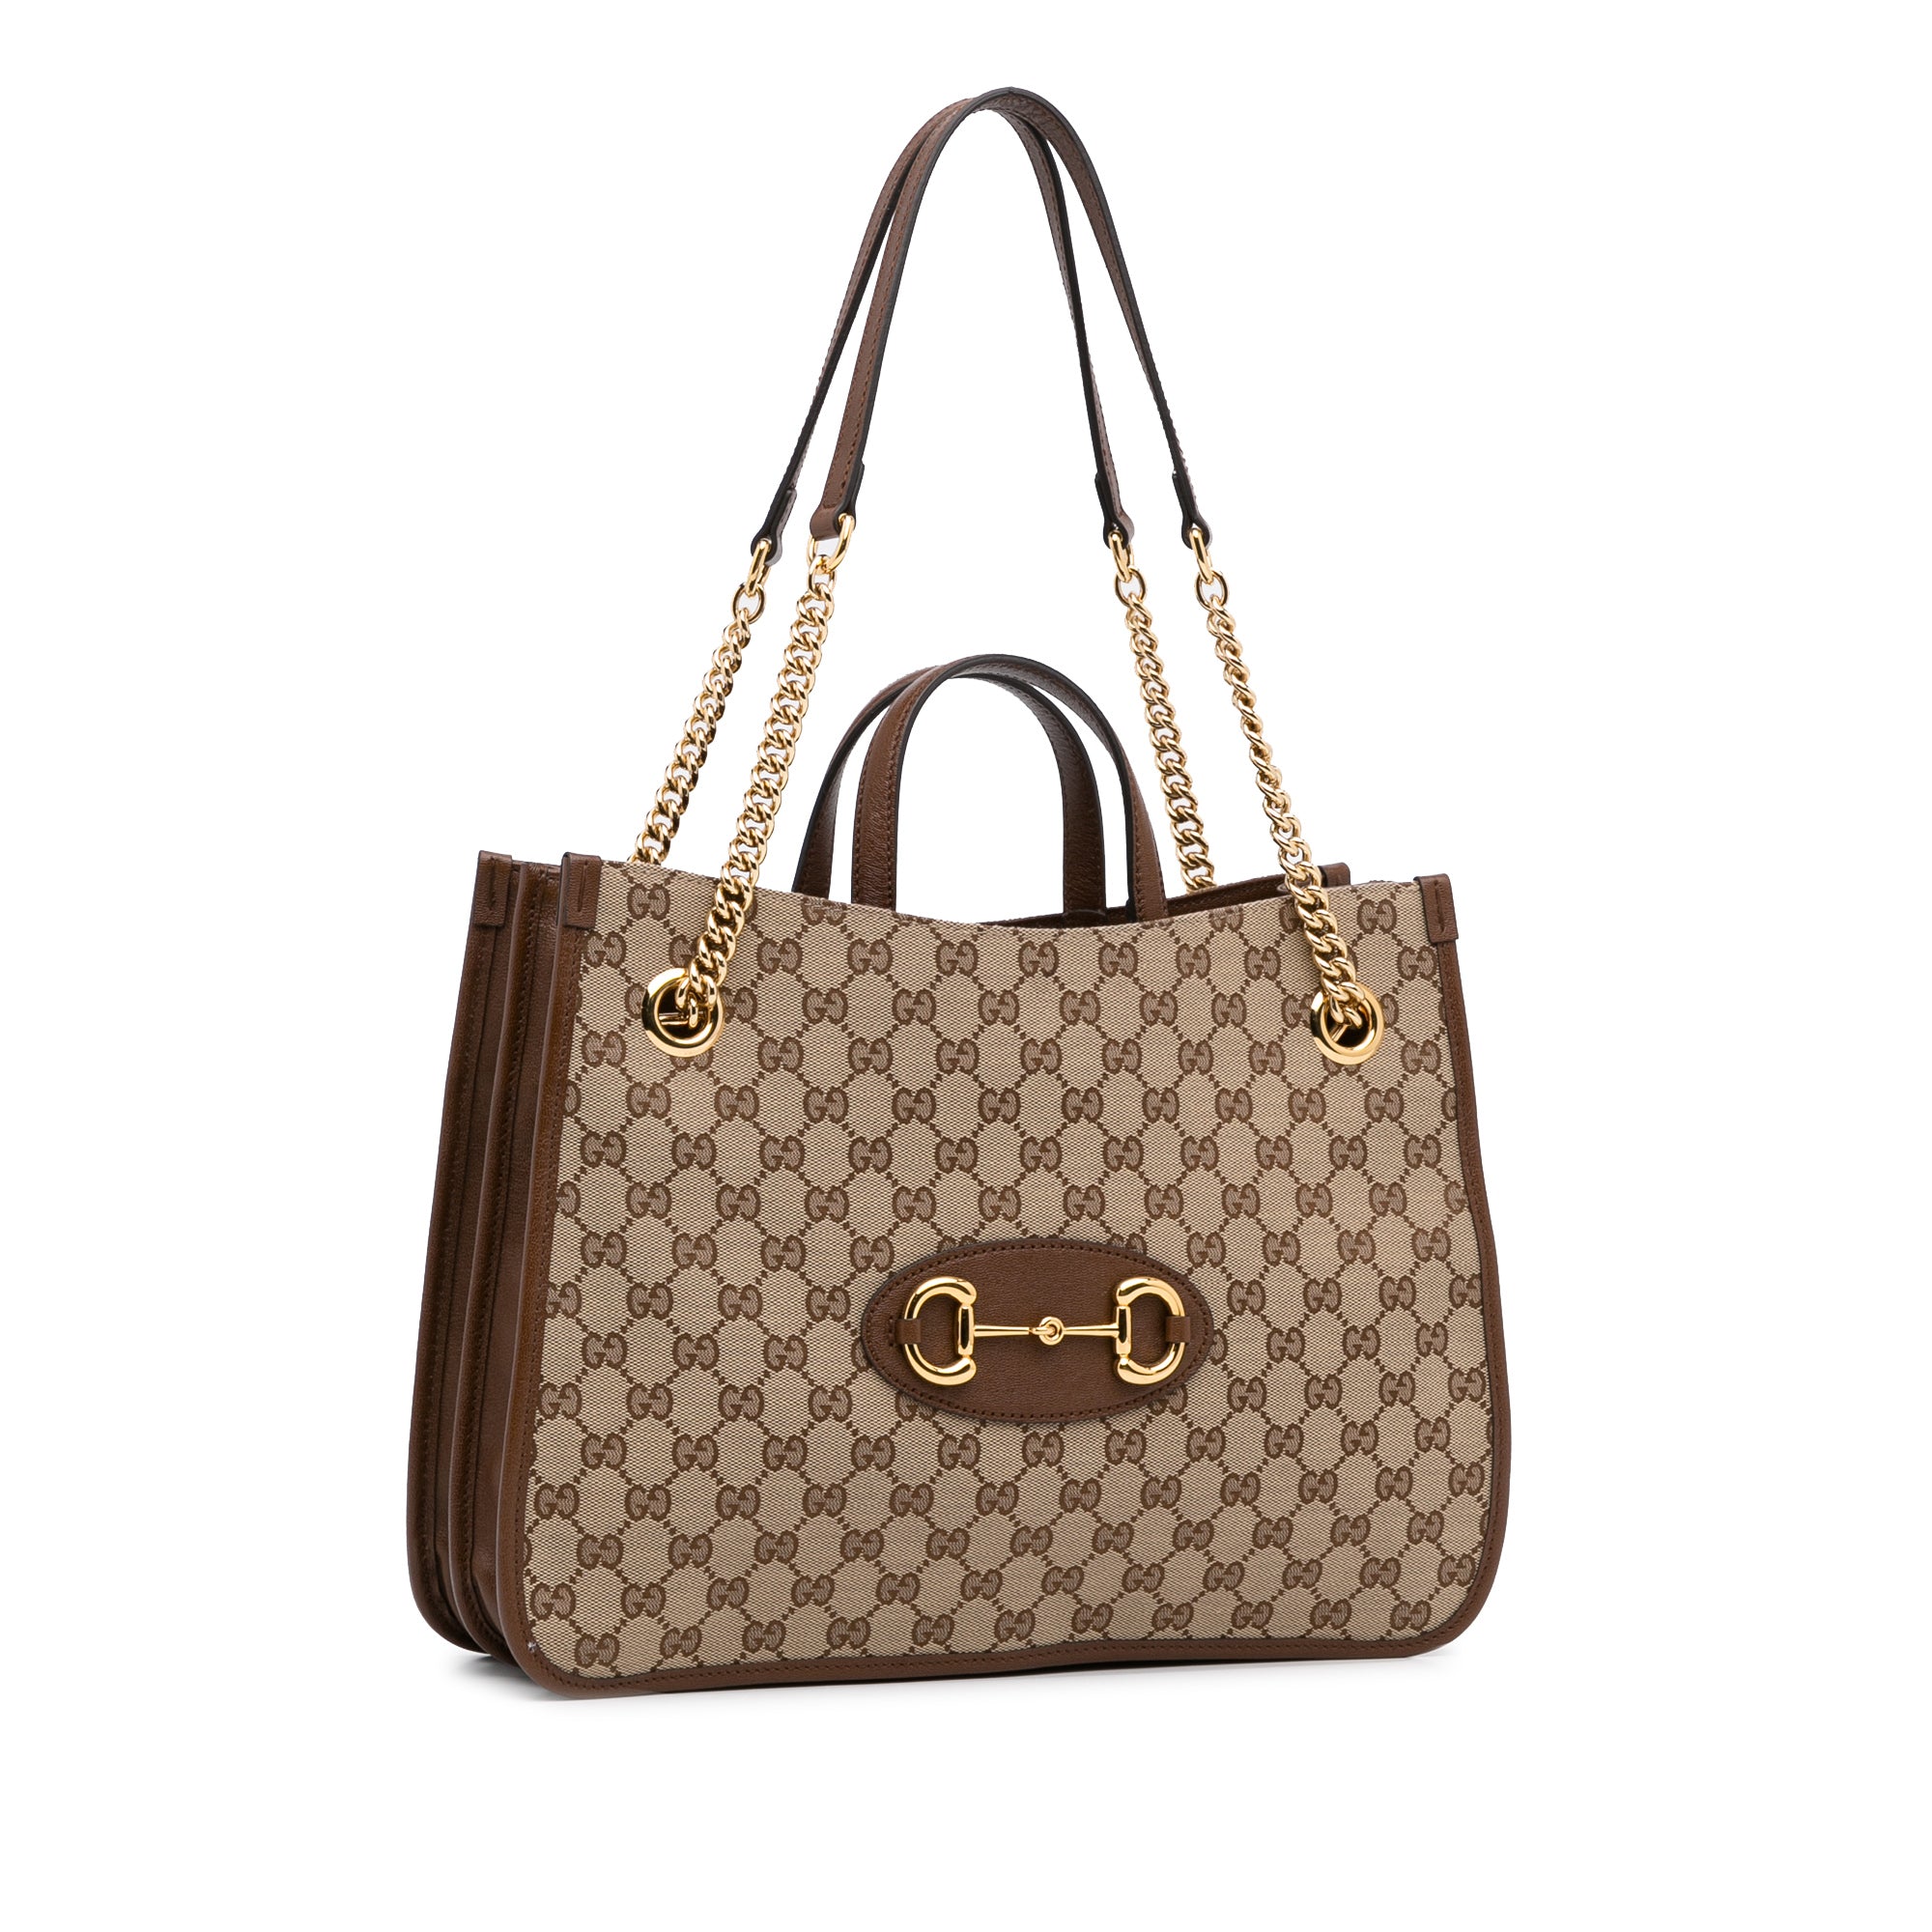 Gucci's 1955 Horsebit Bag Is the Latest Designer It Bag